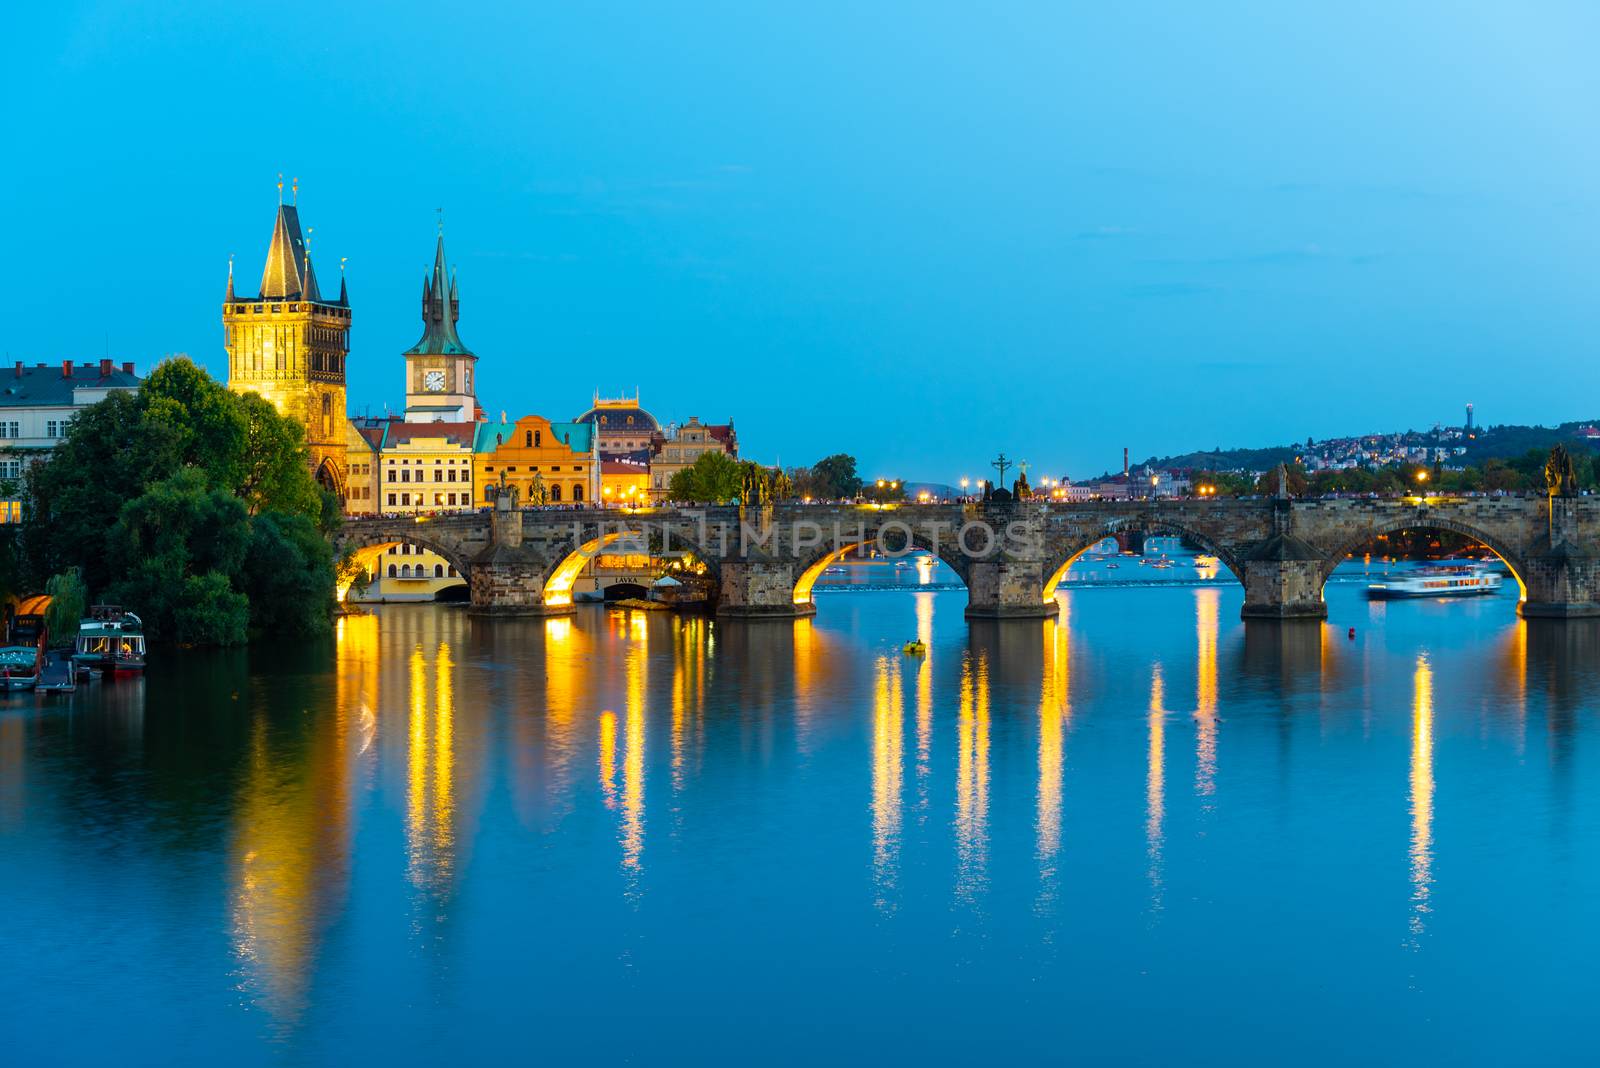 Illuminated Charles Bridge reflected in Vltava River. Evening in Prague, Czech Republic.